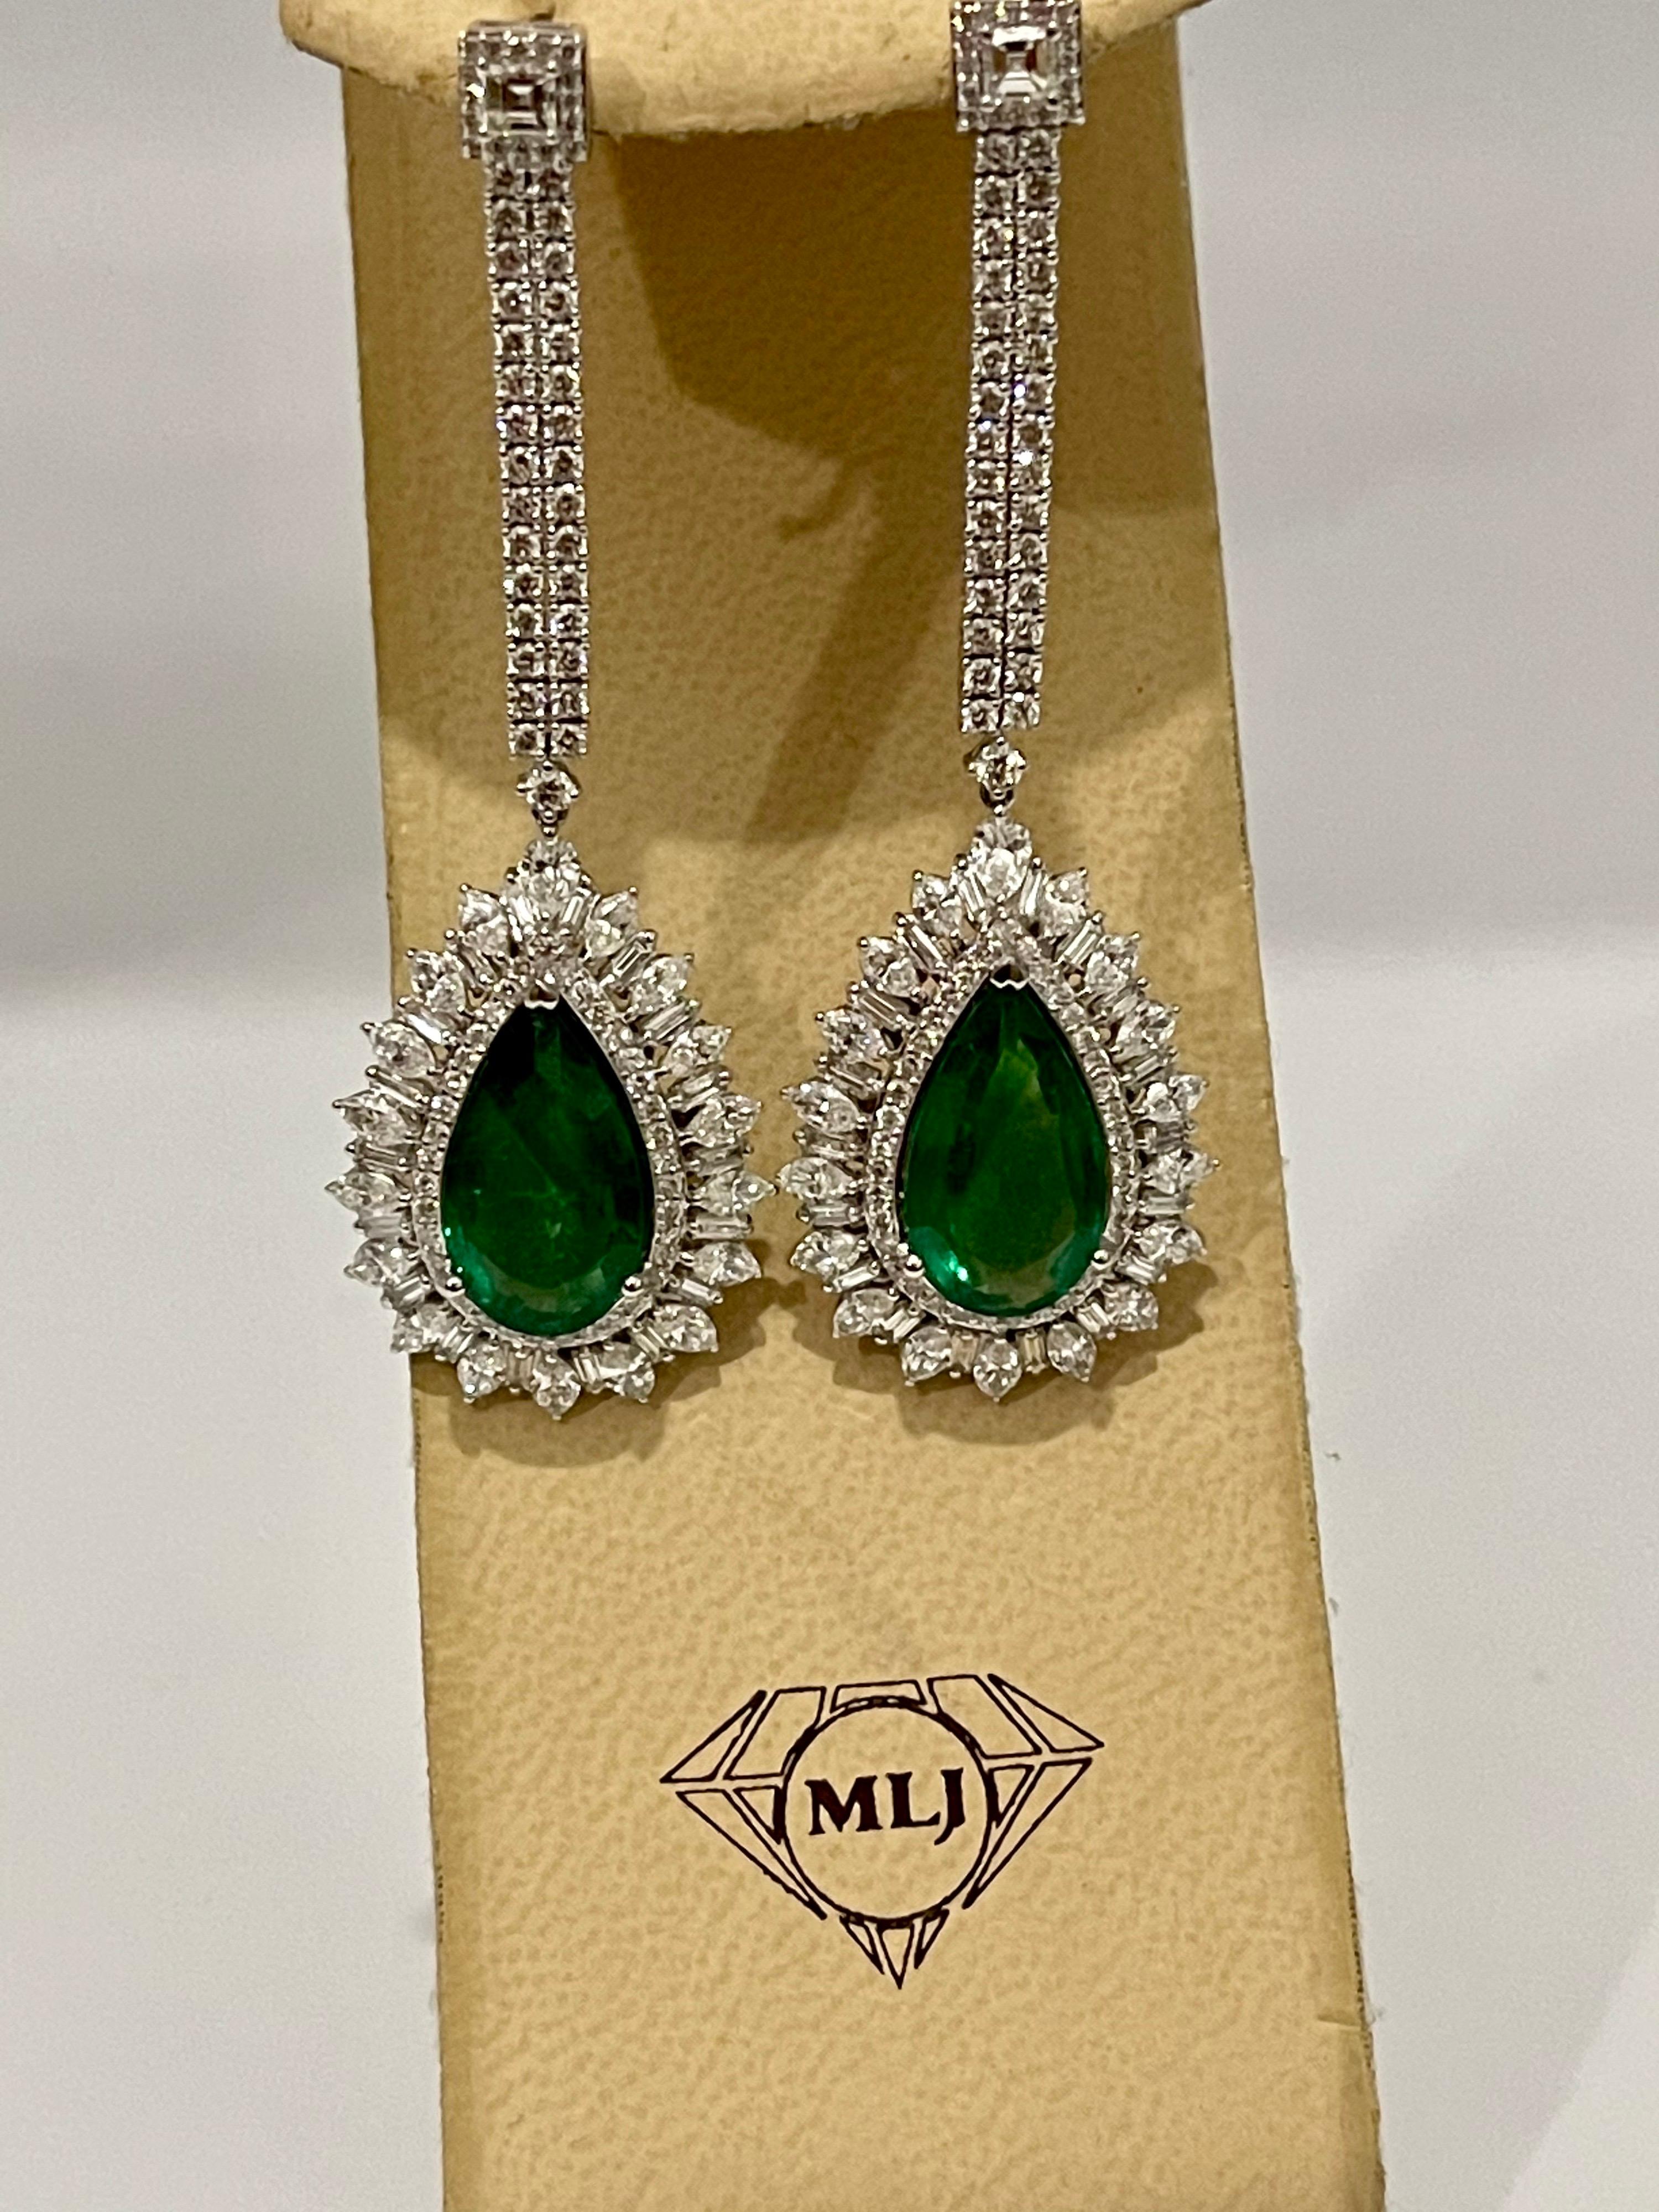 11 Ct Pear Shape Zambian Emerald & 6 Ct Diamonds Drop Earrings 18K White Gold 5